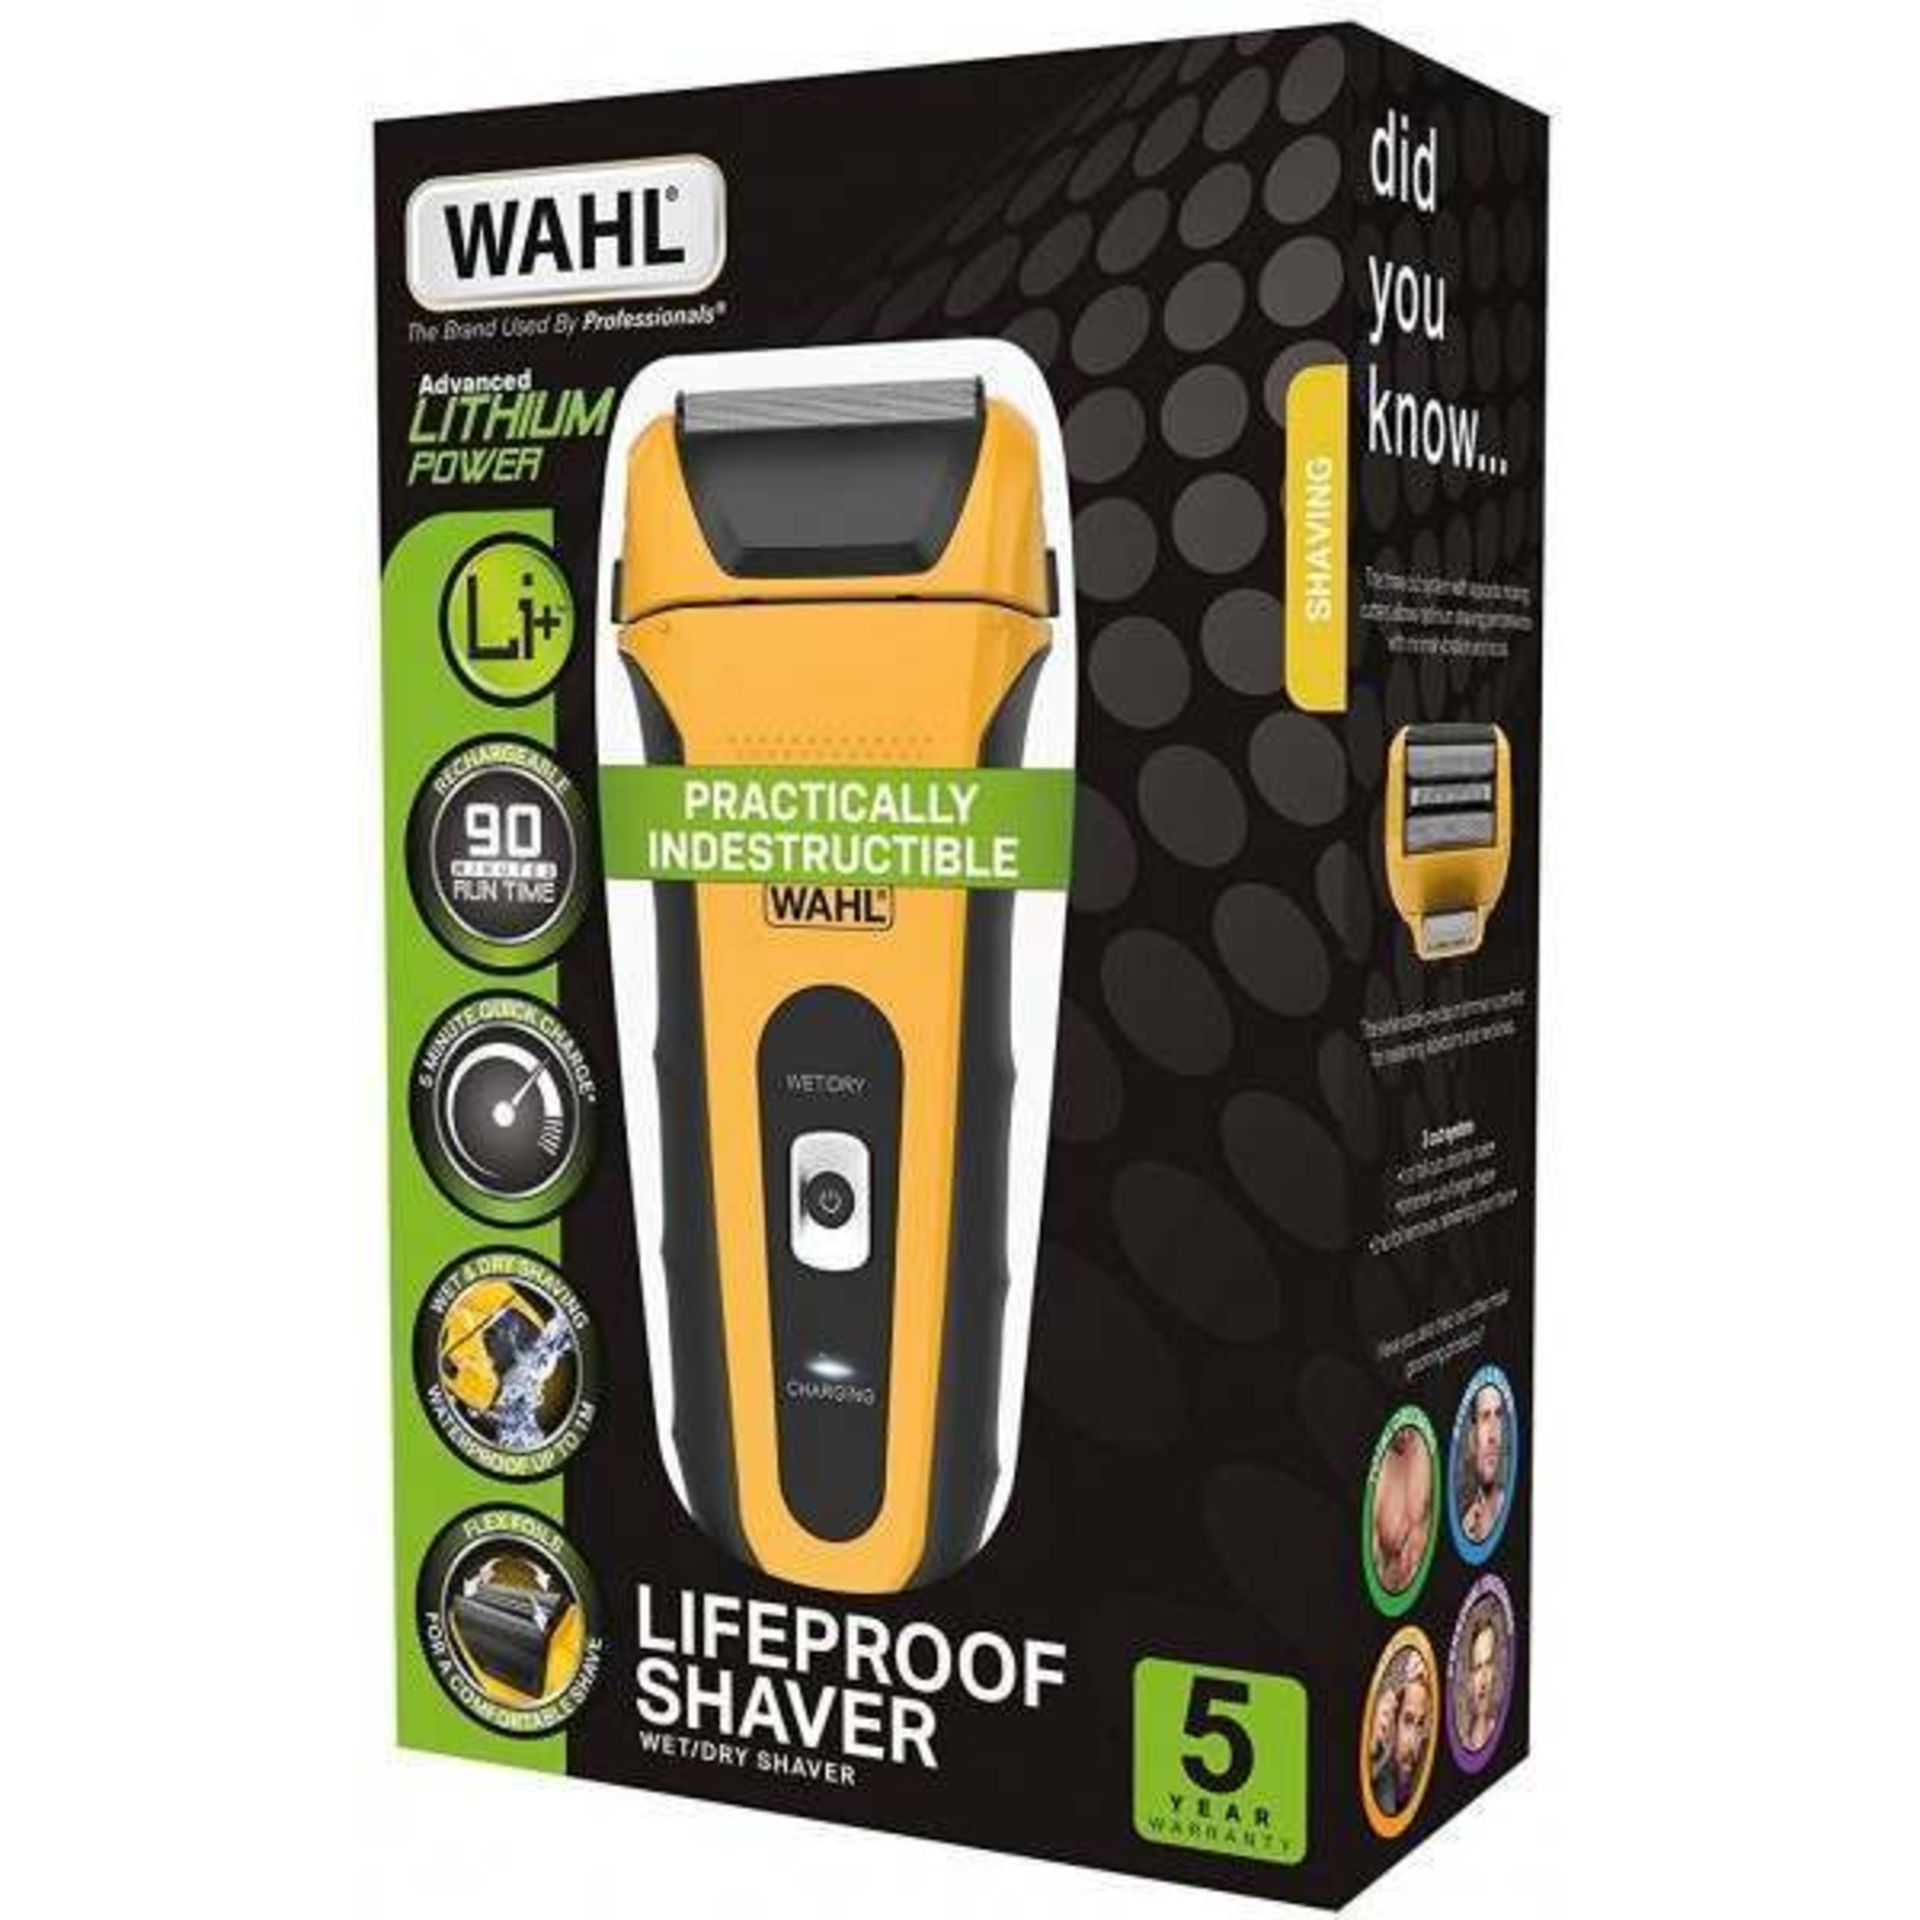 Wahl Lithium Power Lifeproof Shaver - Untested Customer Return - Image 2 of 4